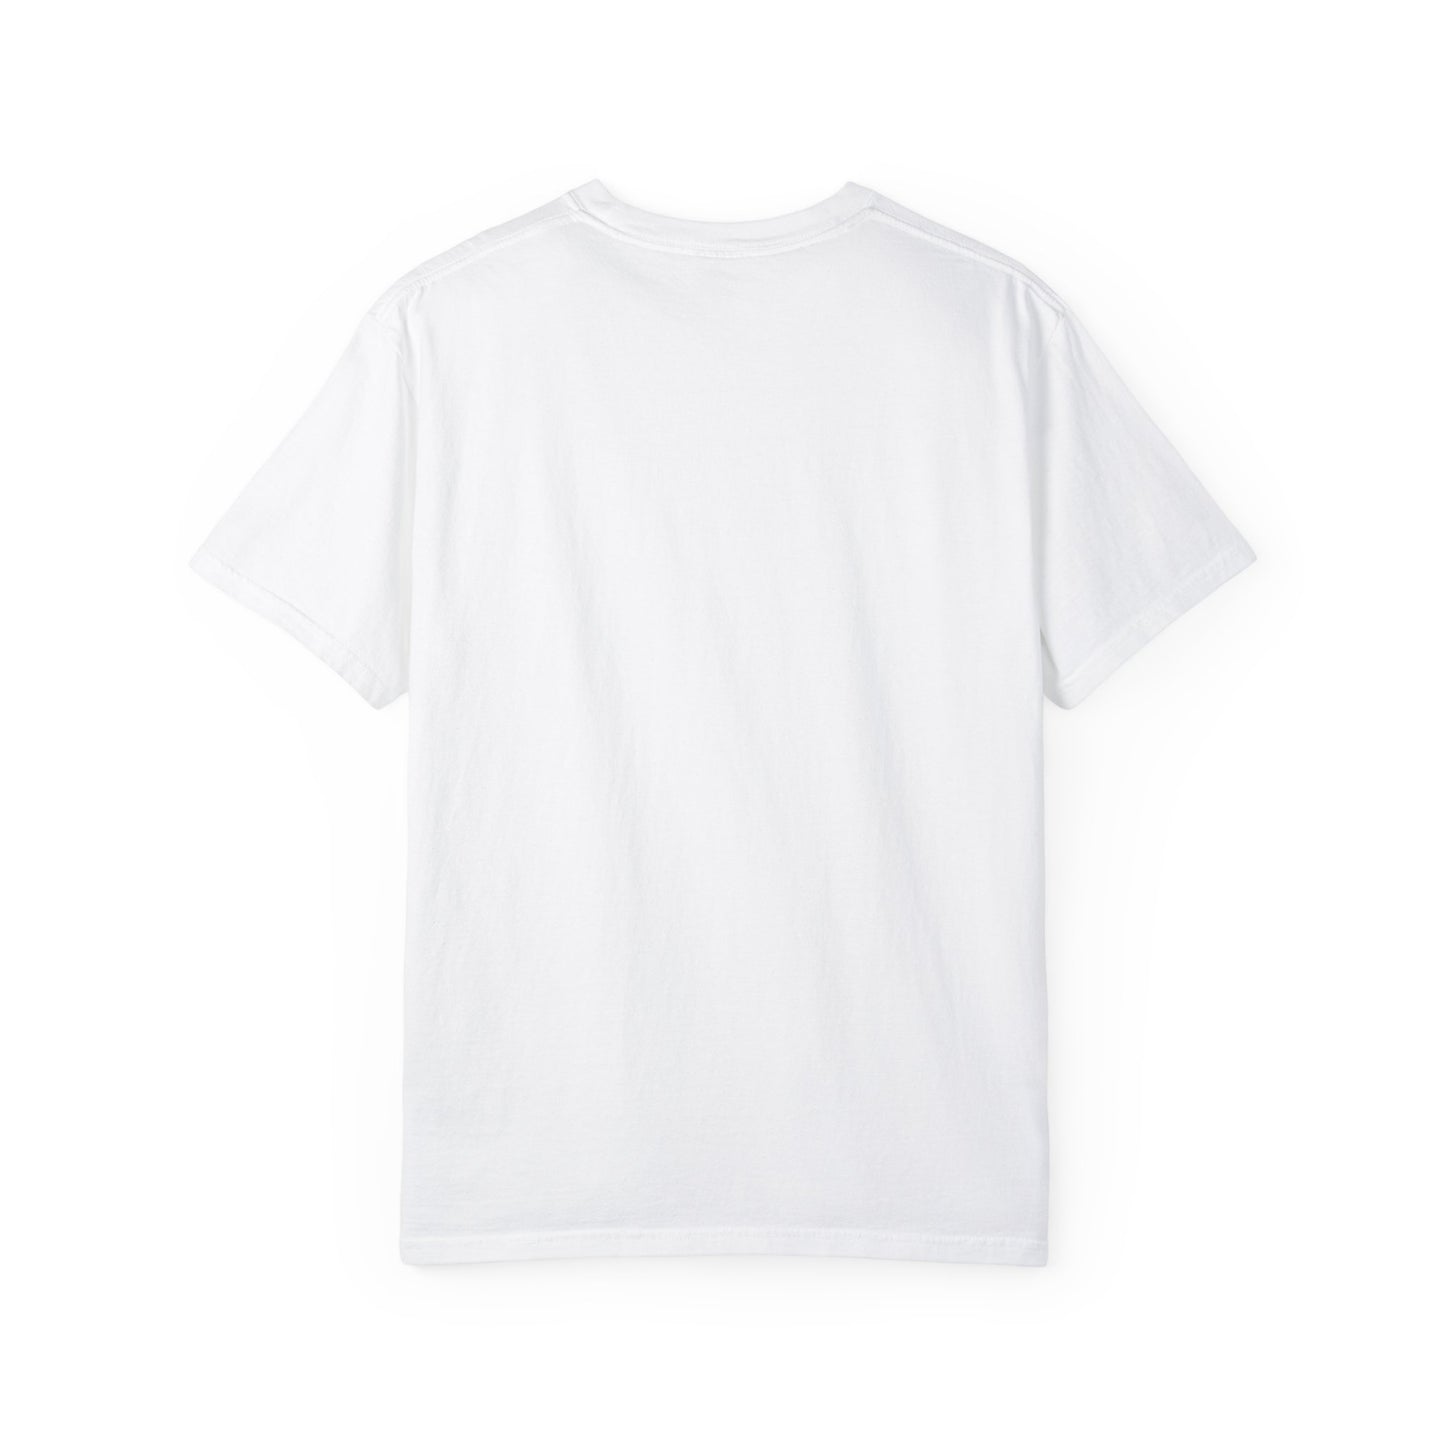 Best mama ever - Unisex Garment-Dyed T-shirt